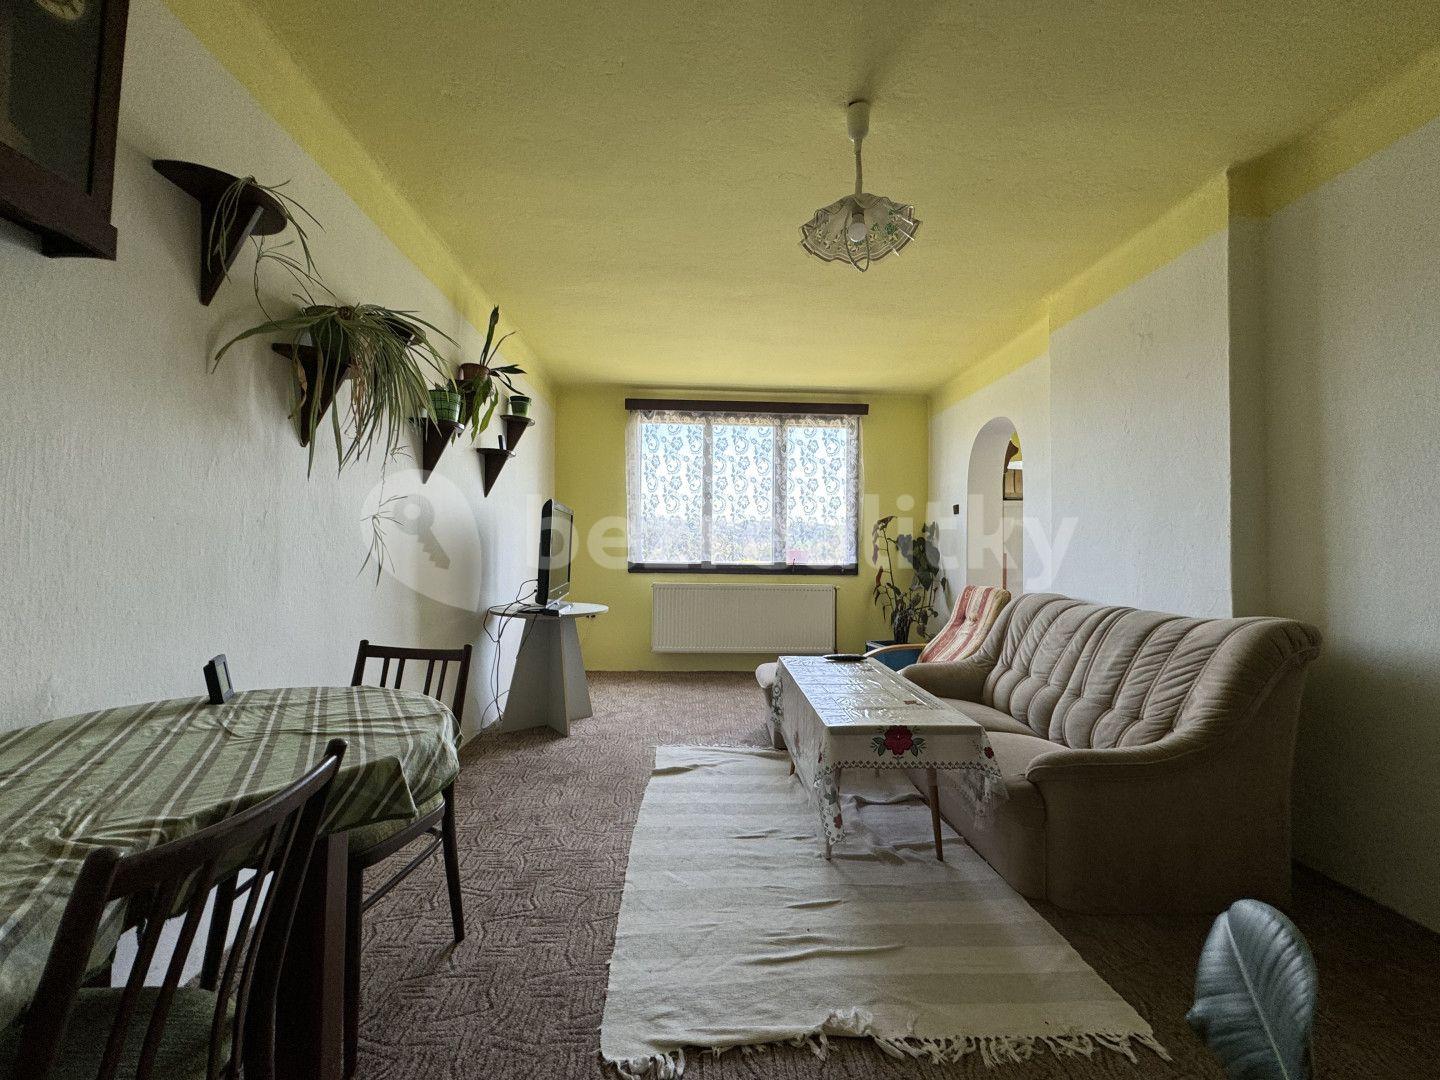 3 bedroom flat for sale, 59 m², Šebířov, Jihočeský Region